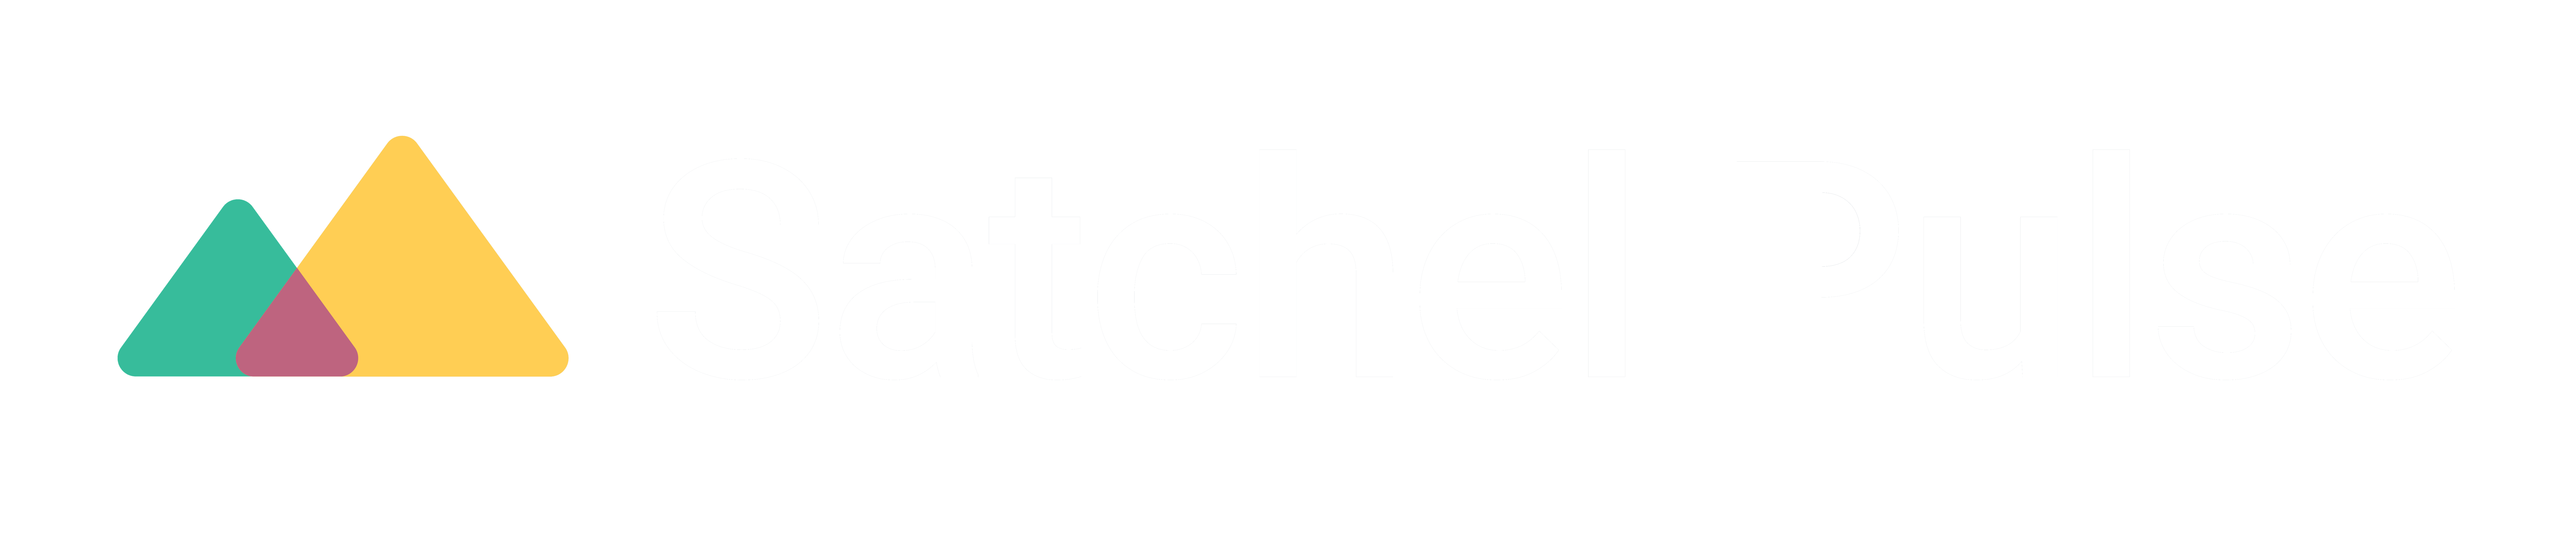 2021 satchel_pulse_logo_white_text